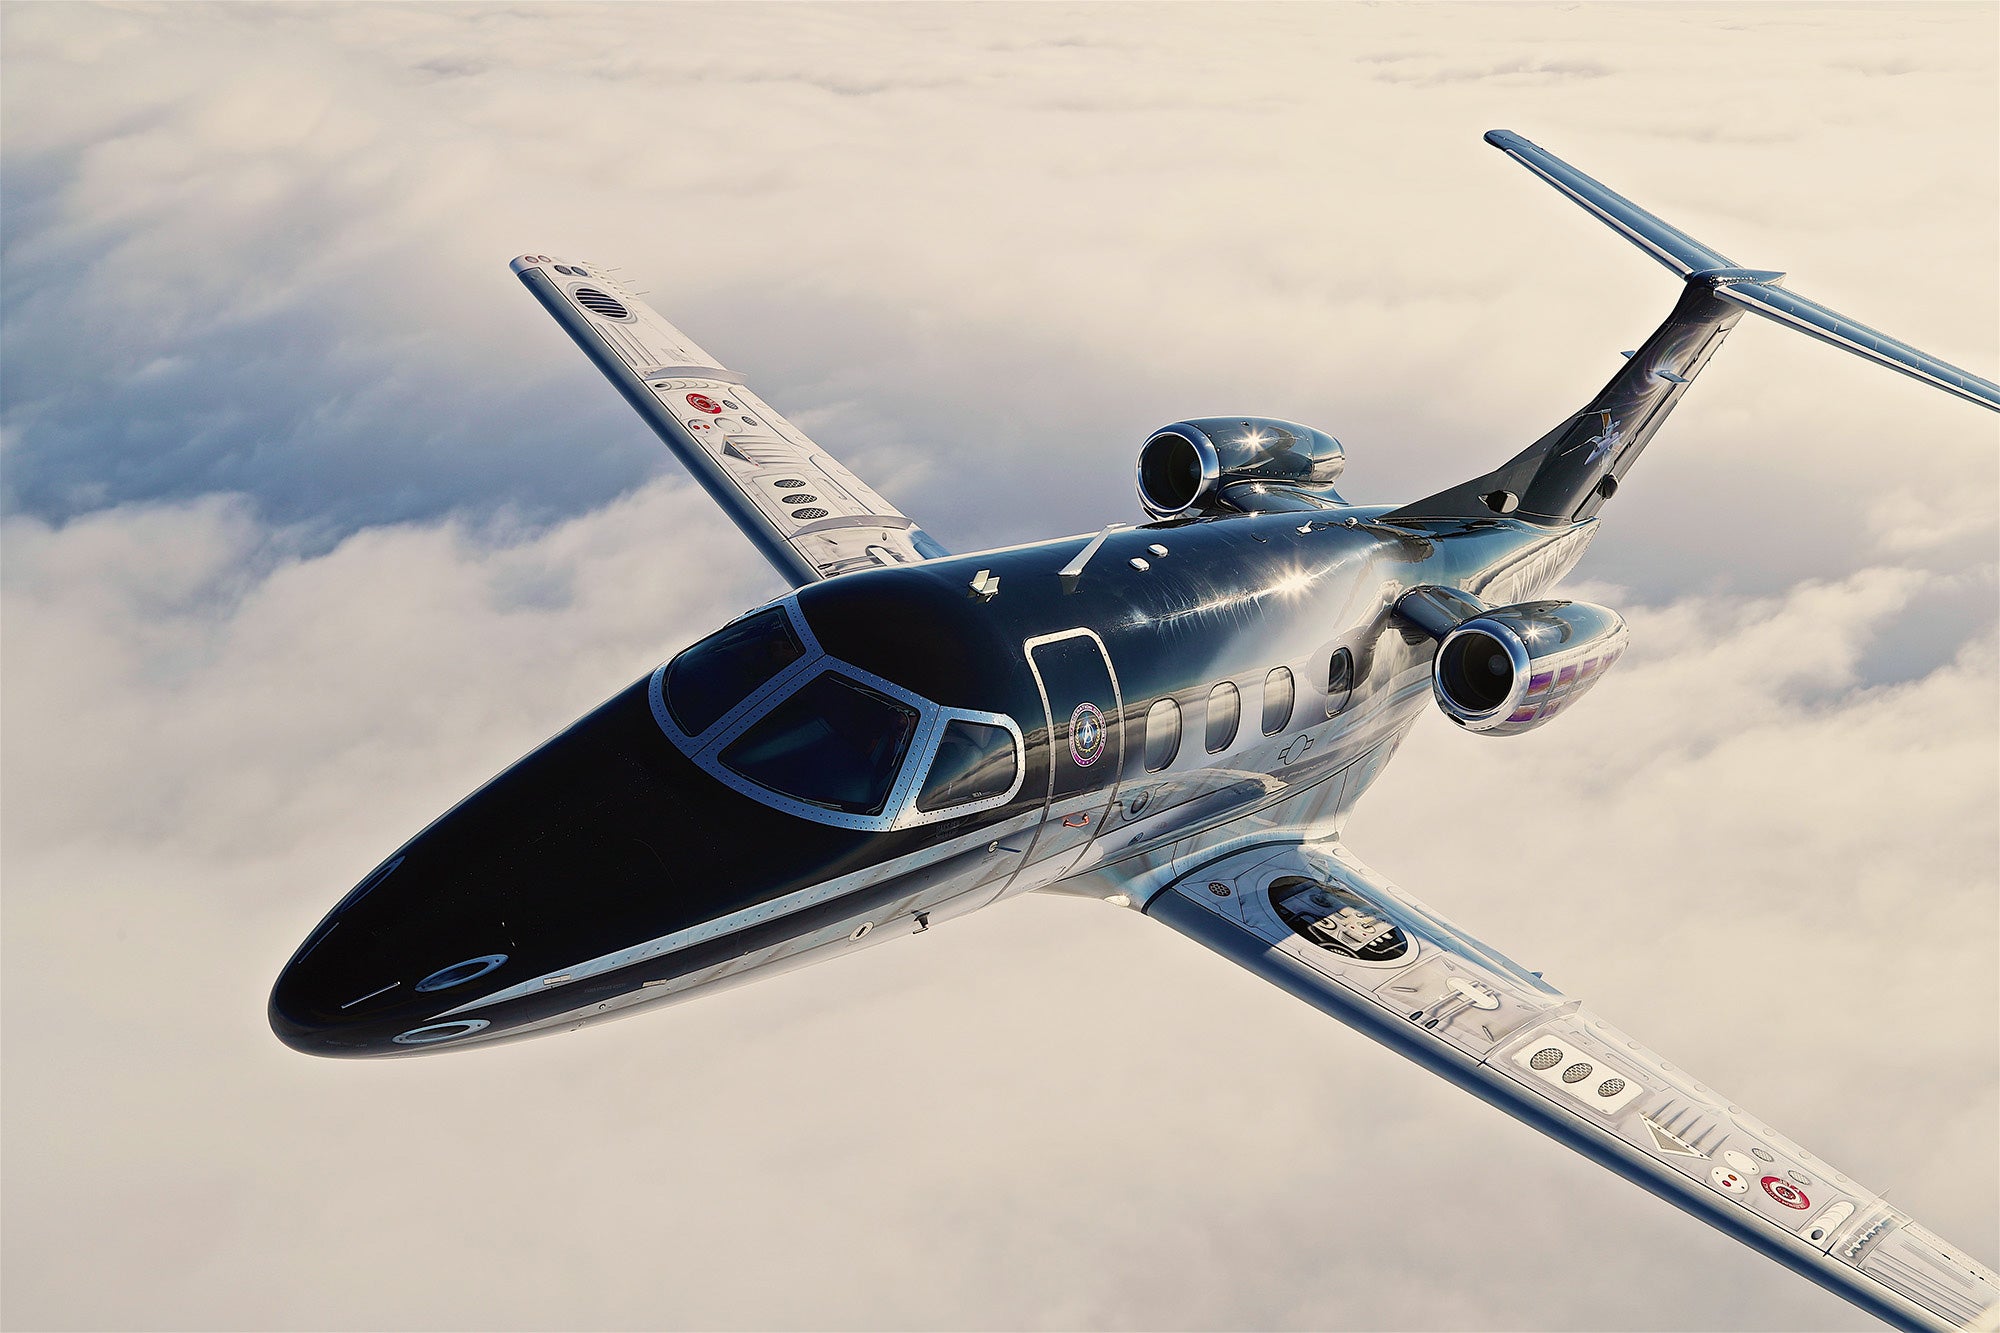 Star Wars-themed Millenium Phenom business jet